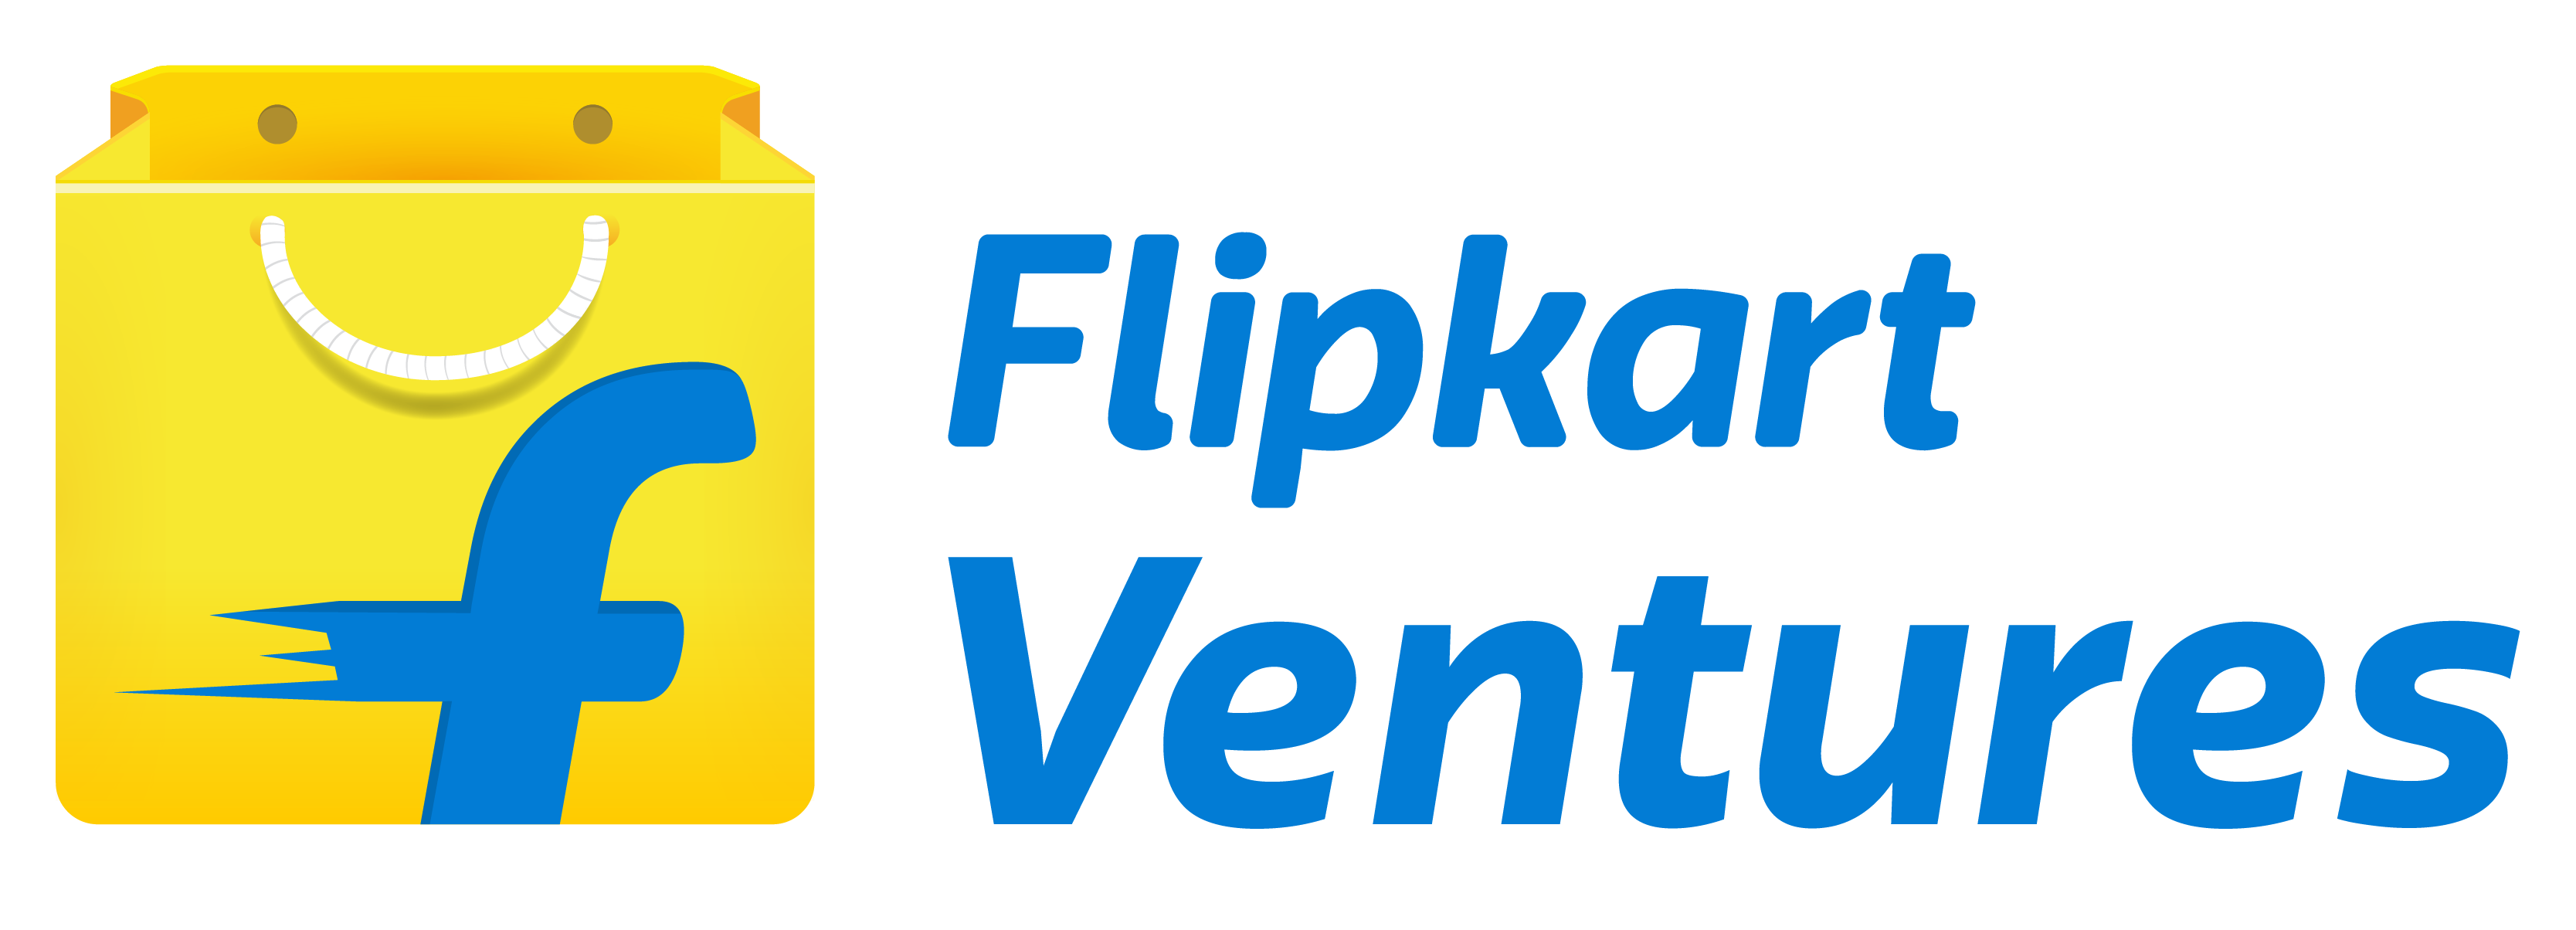 Venture Capital Job - Investment Manager - Flipkart Ventures - The ...